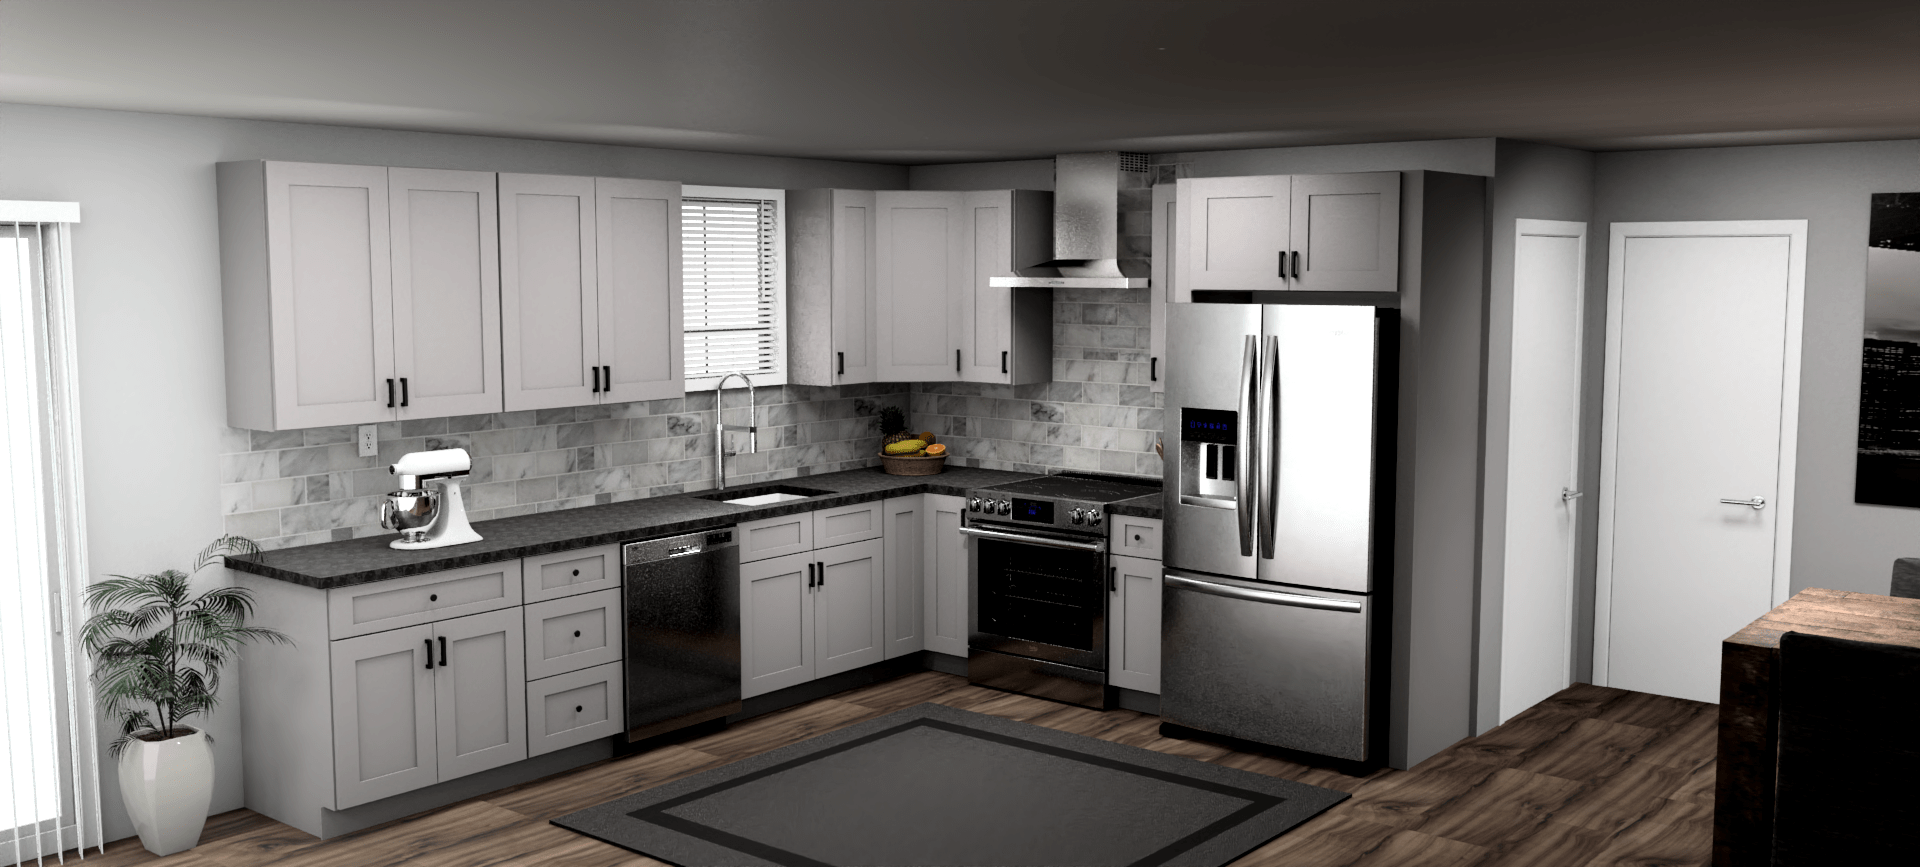 Fabuwood Allure Galaxy Nickel 12 x 10 L Shaped Kitchen Main Layout Photo